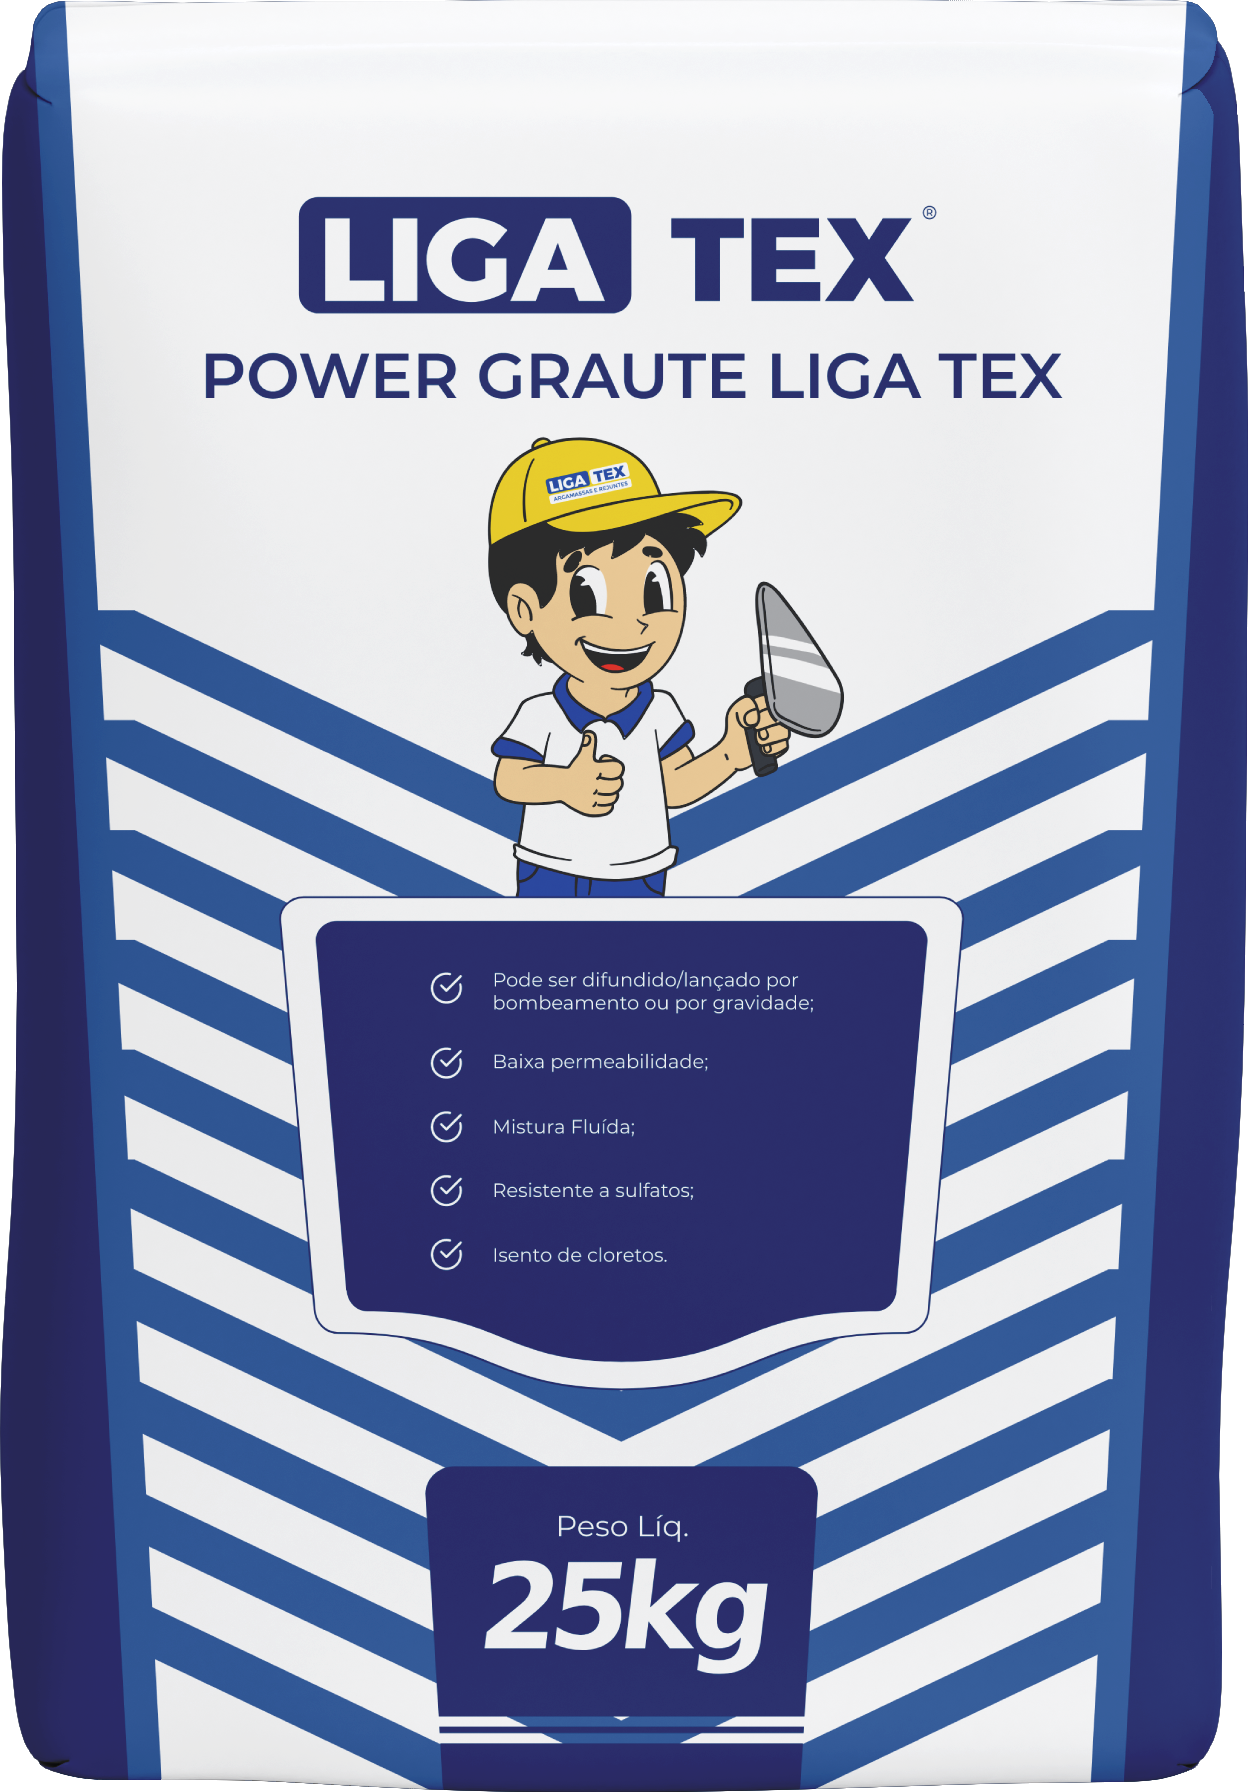 Power Graute LigaTex